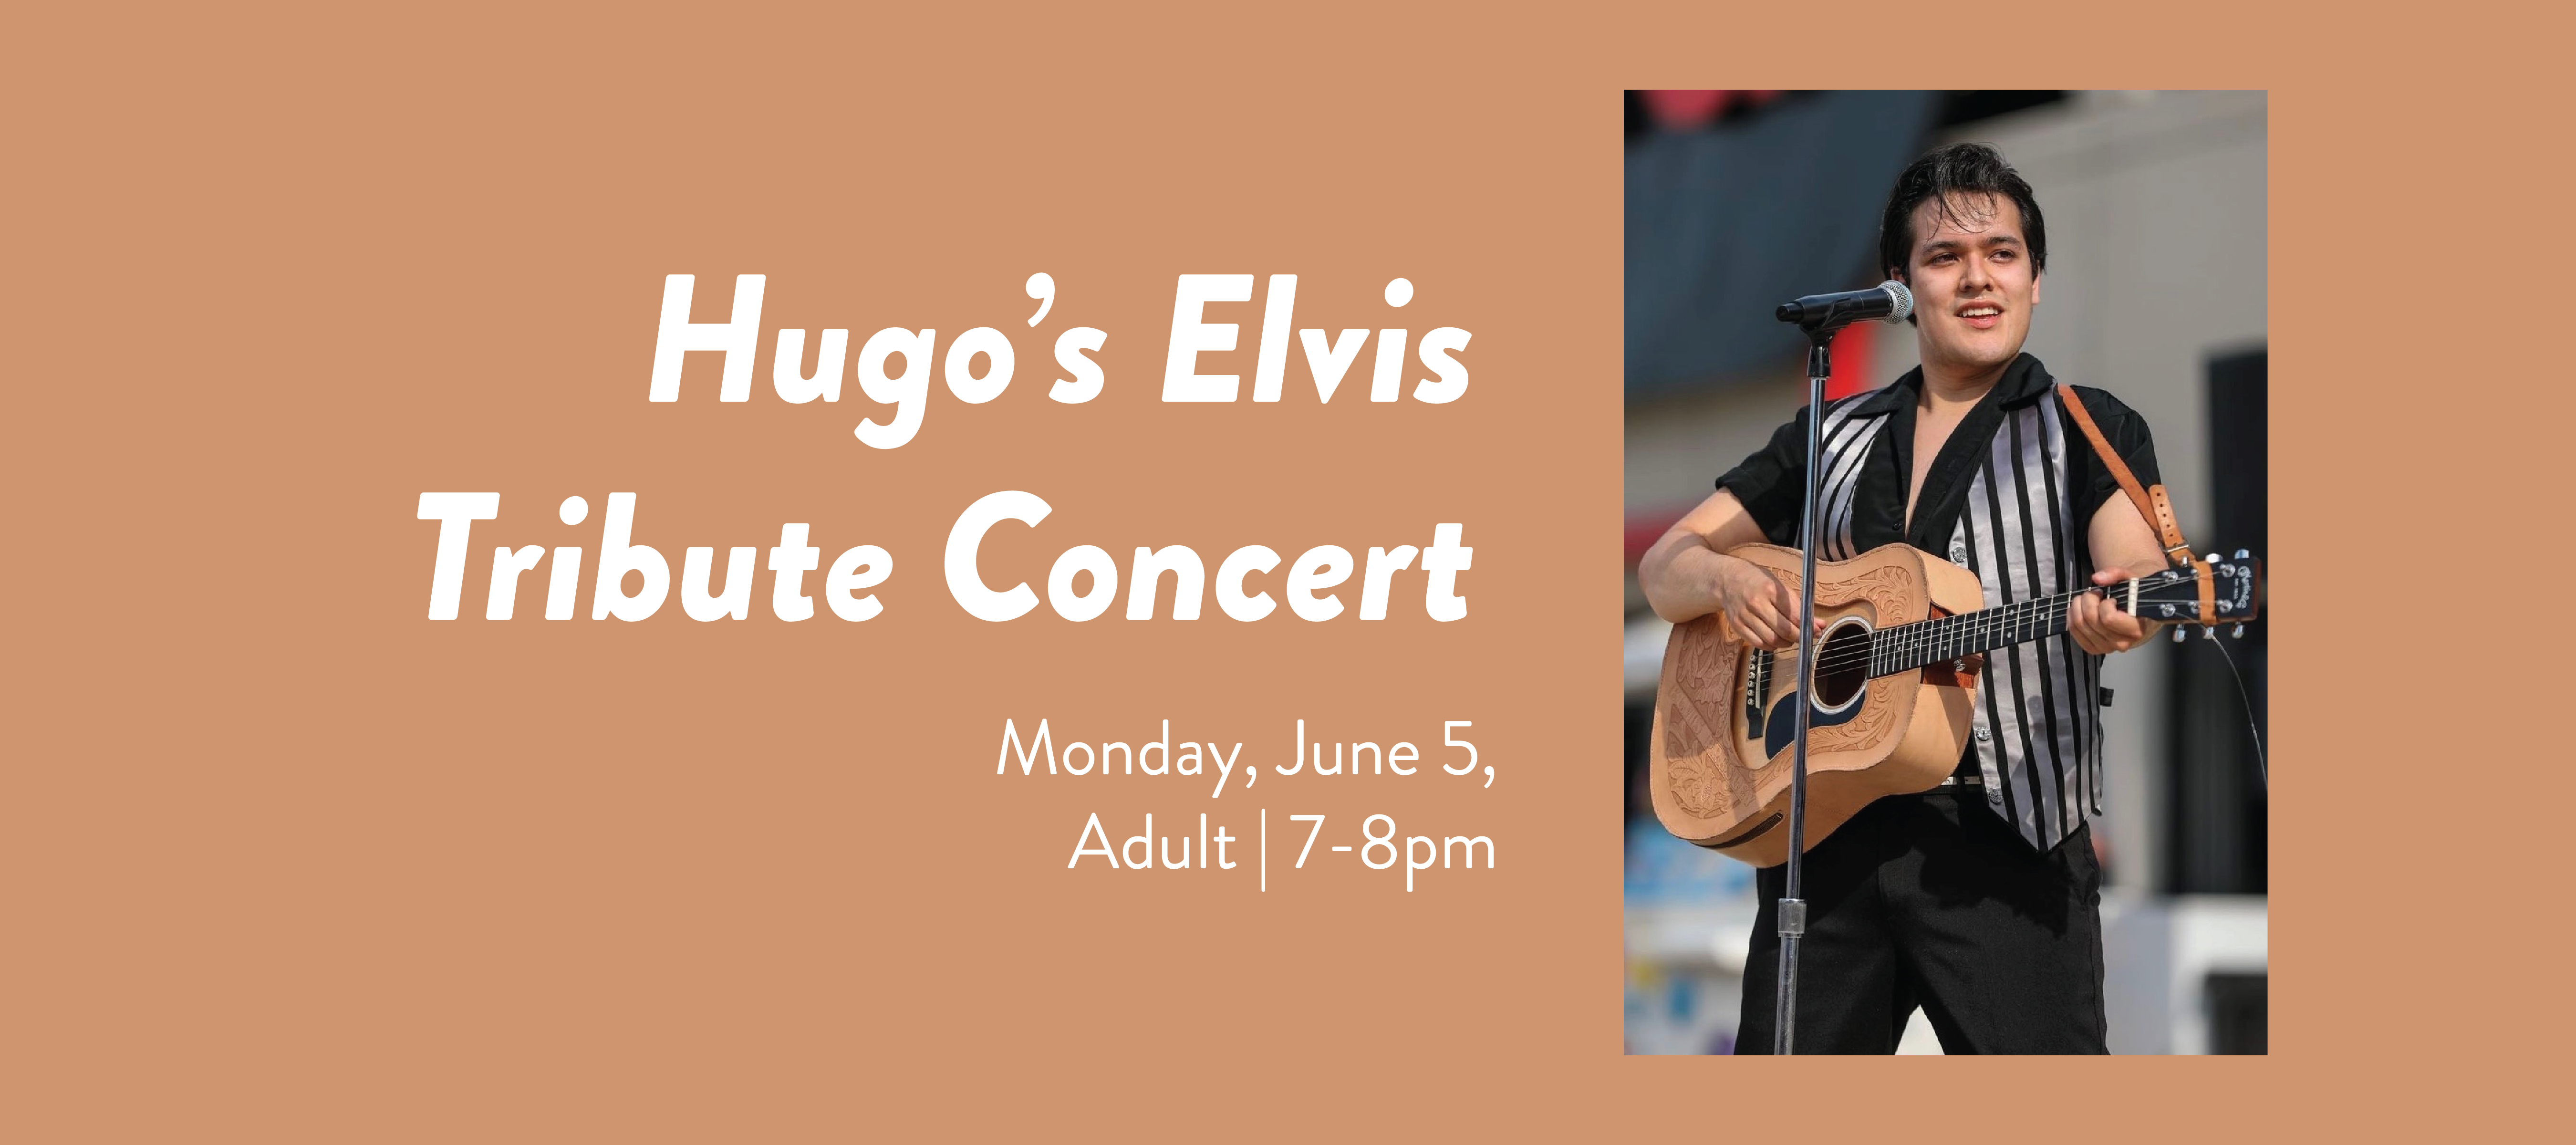 Hugo's Elvis Tribute Concert, elvis concert, tribute concert, prospect heights, public library,